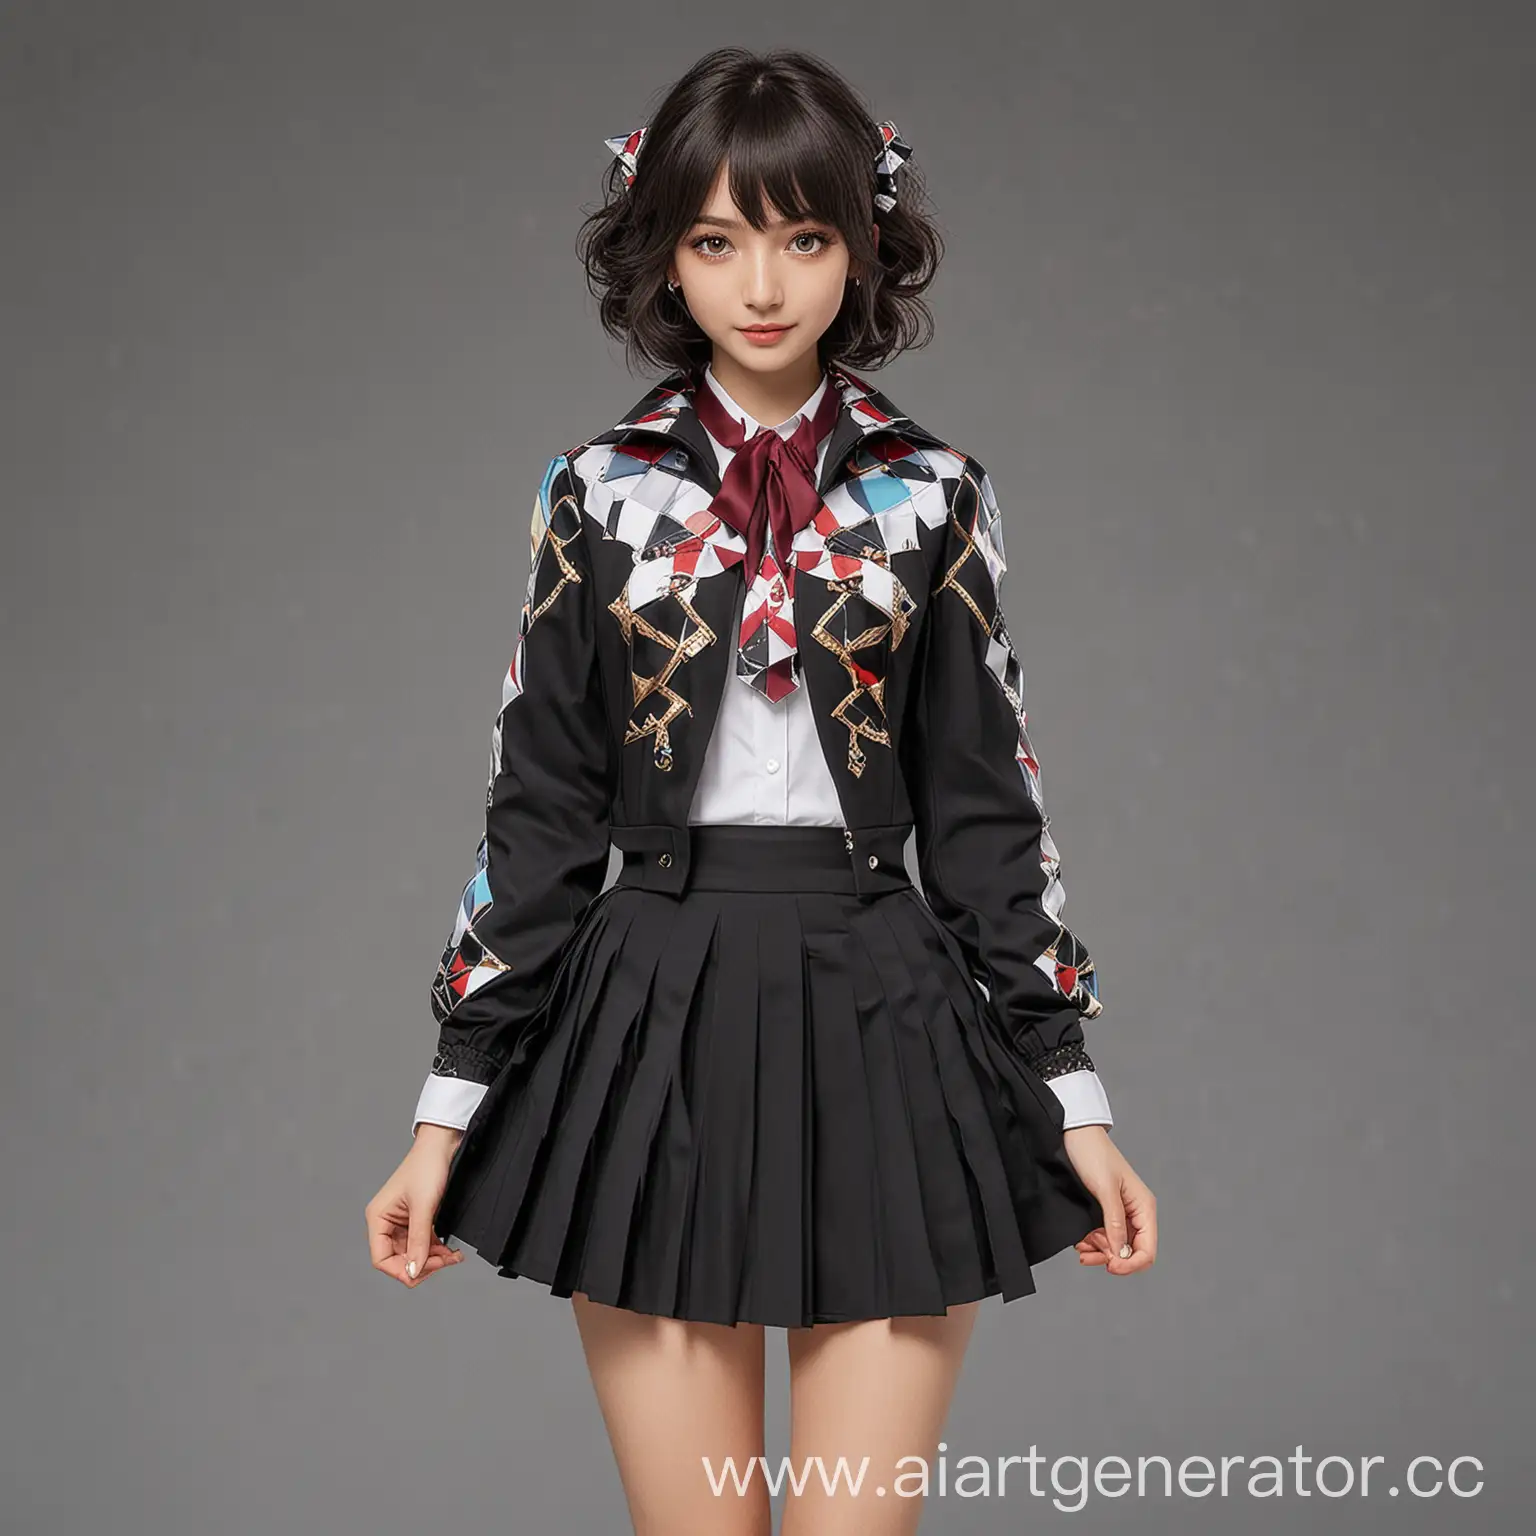 Fashionable-Harlequin-Style-Jacket-and-Black-Pleated-Skirt